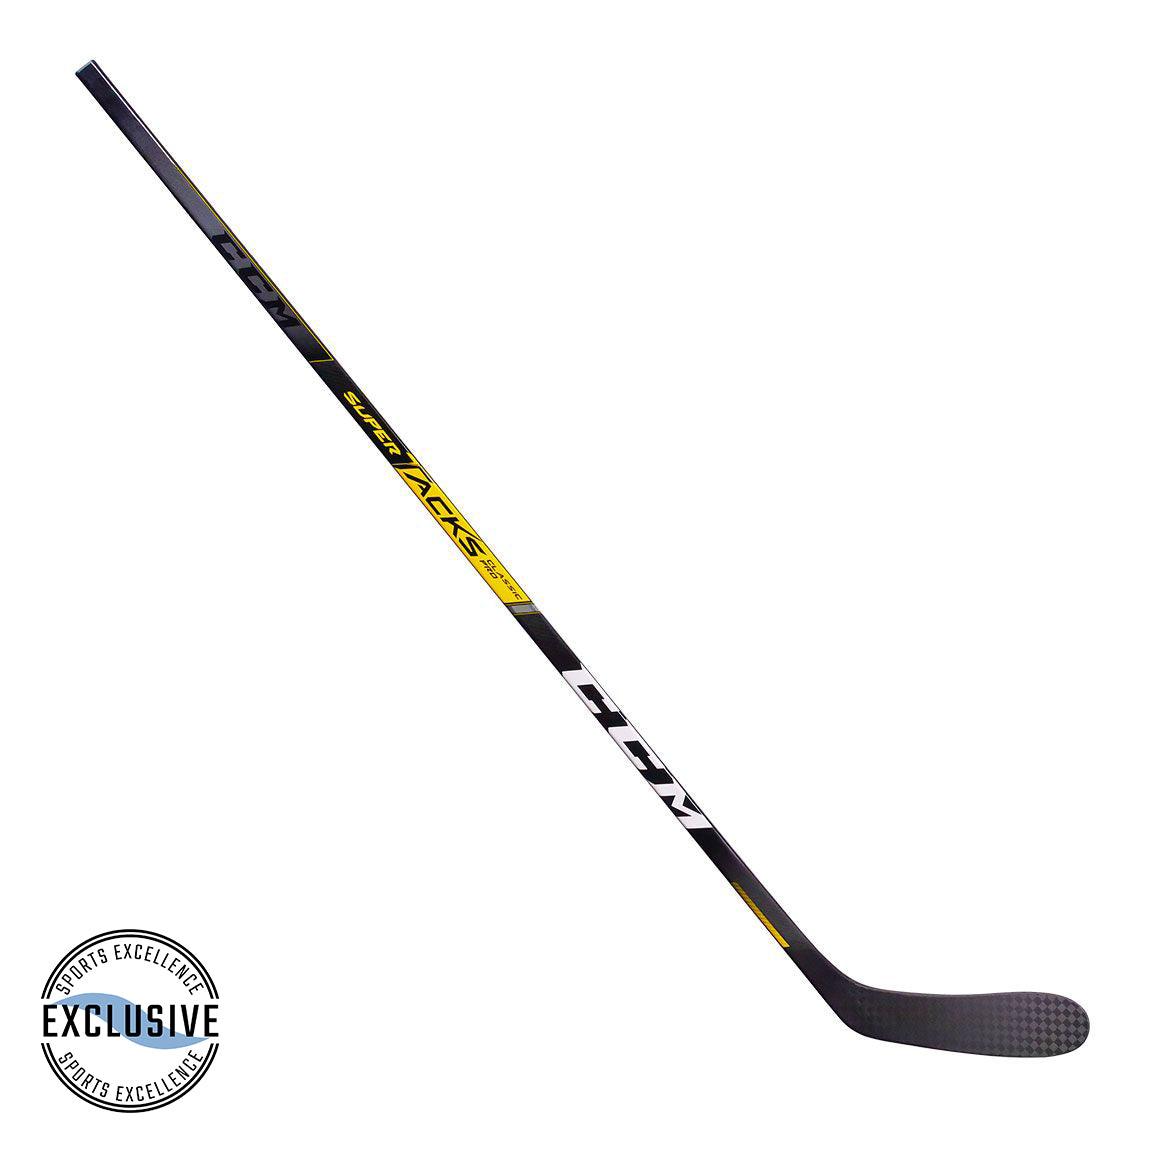 Super Tacks Classic Pro Hockey Stick - Senior